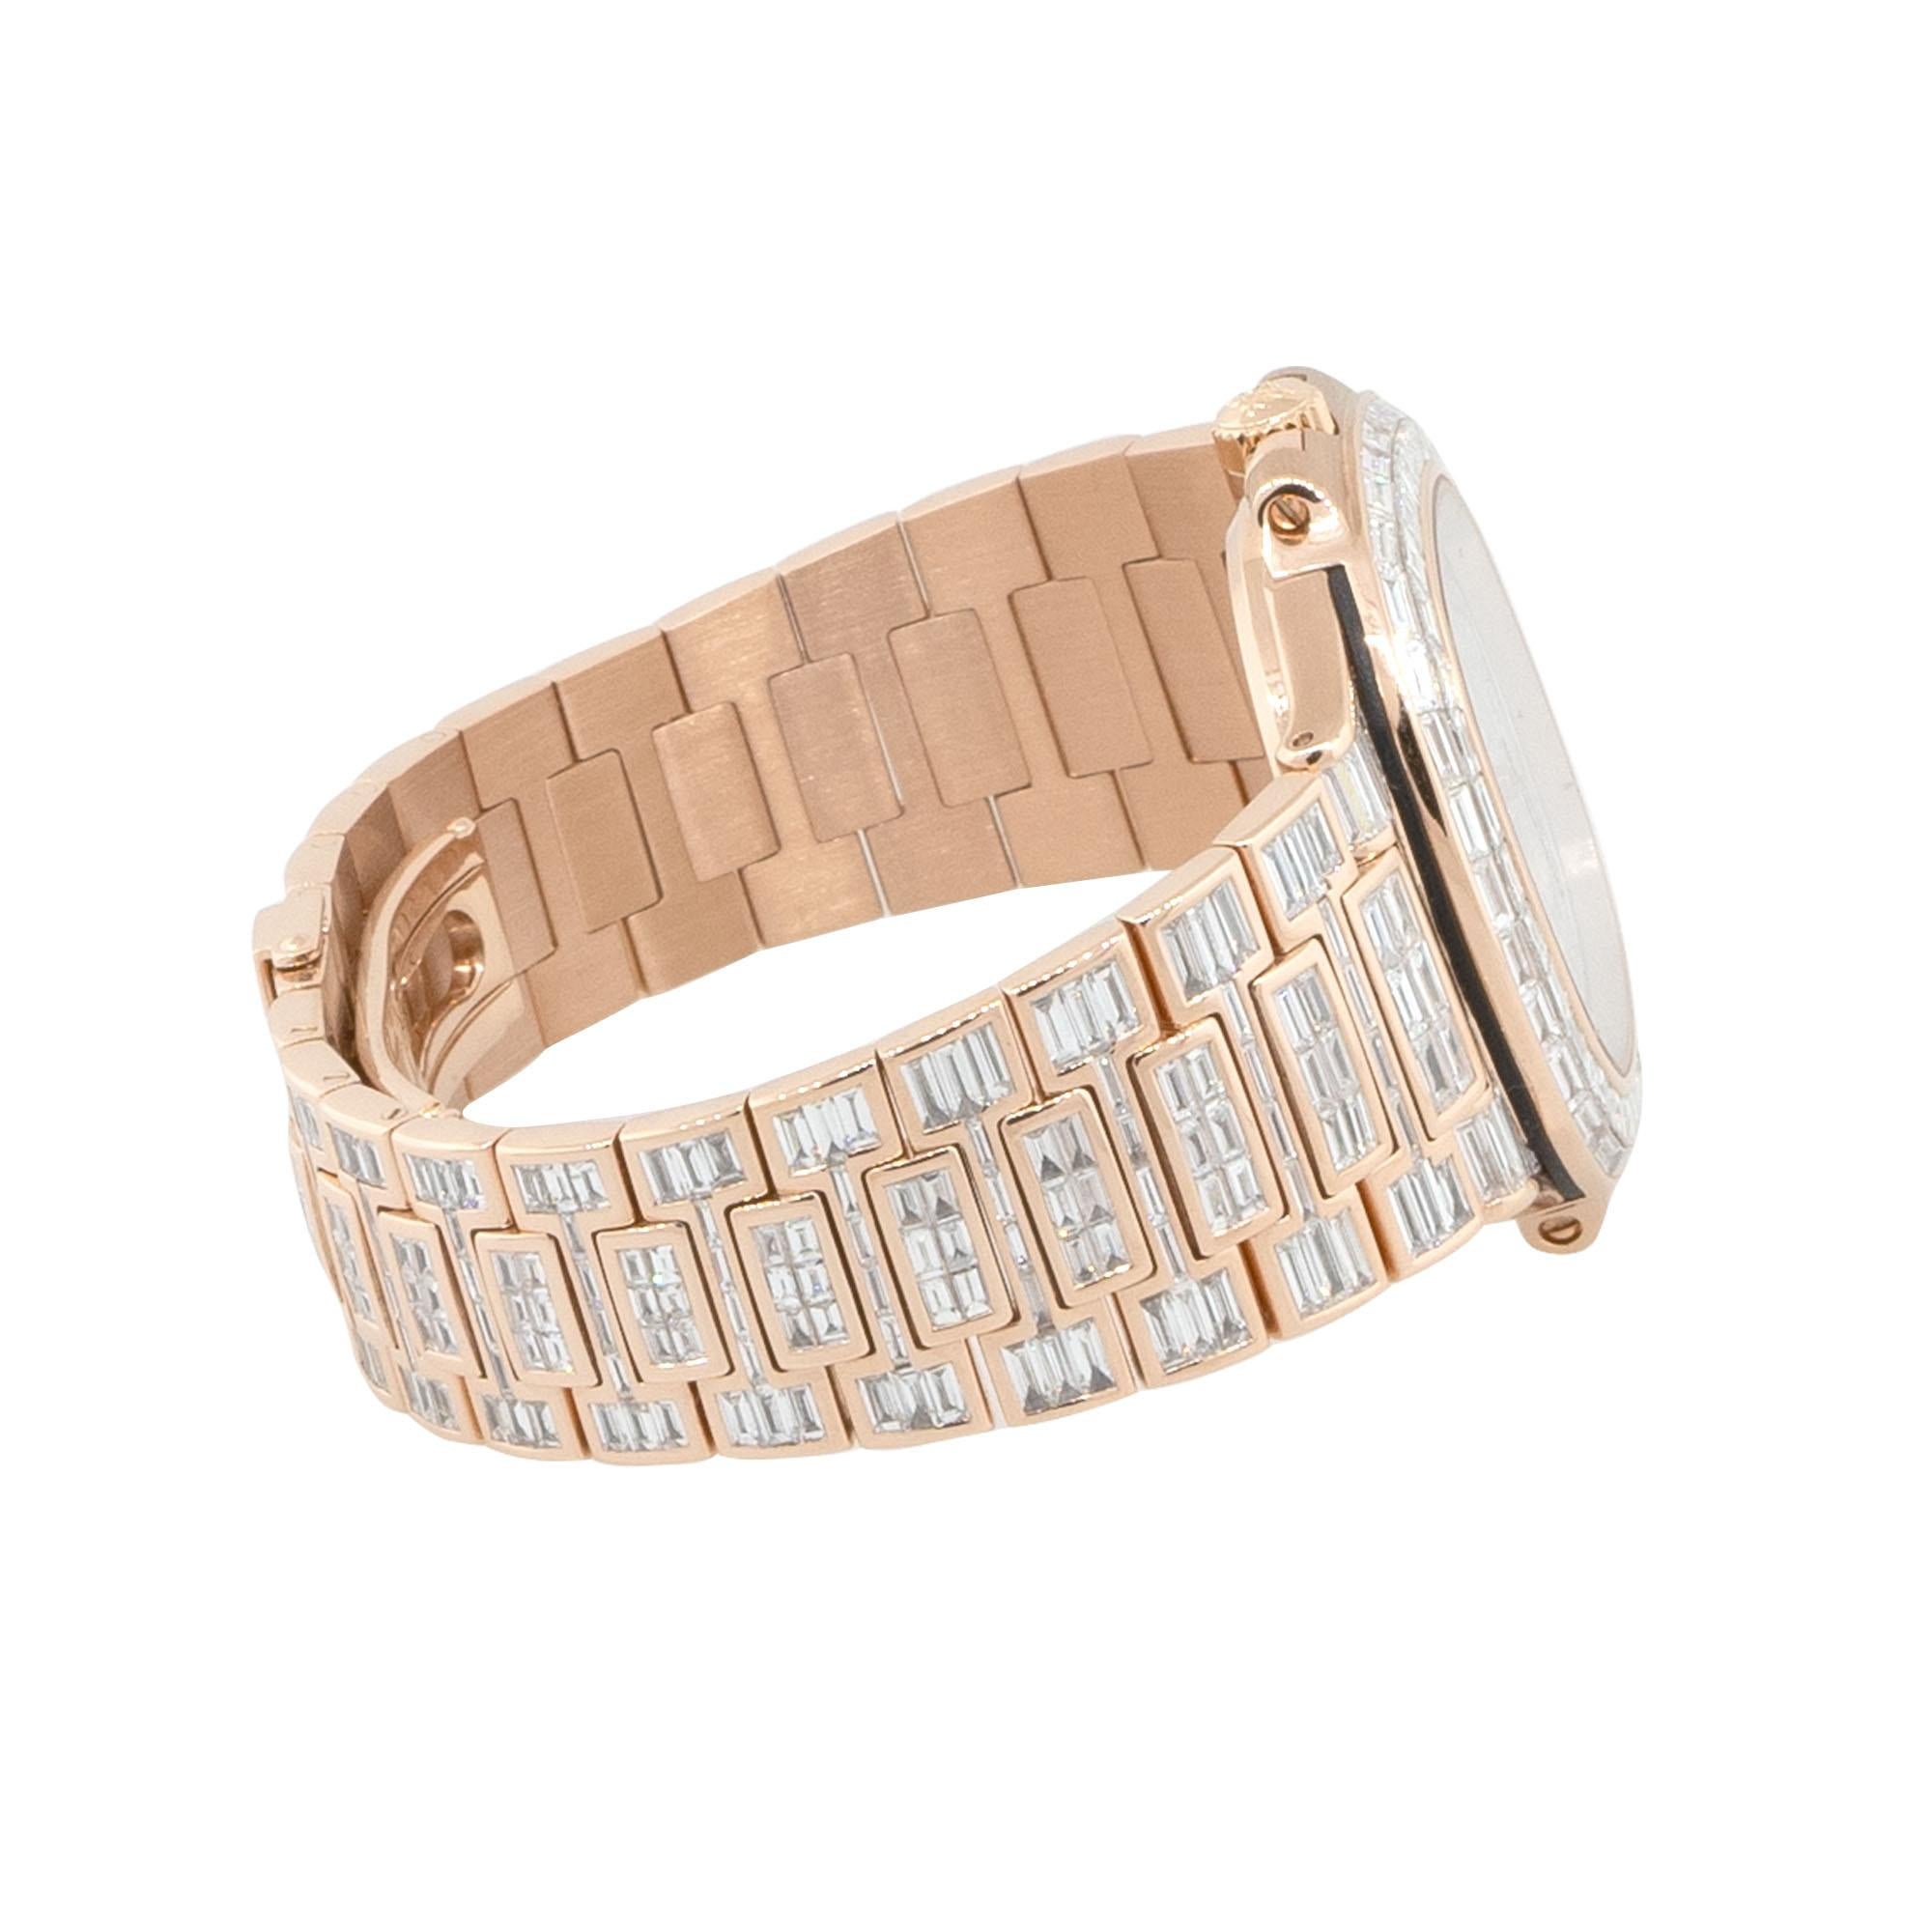 Baguette Cut Patek Philippe Nautilus 18k Rose Gold All Baguette Diamond Watch In Stock For Sale